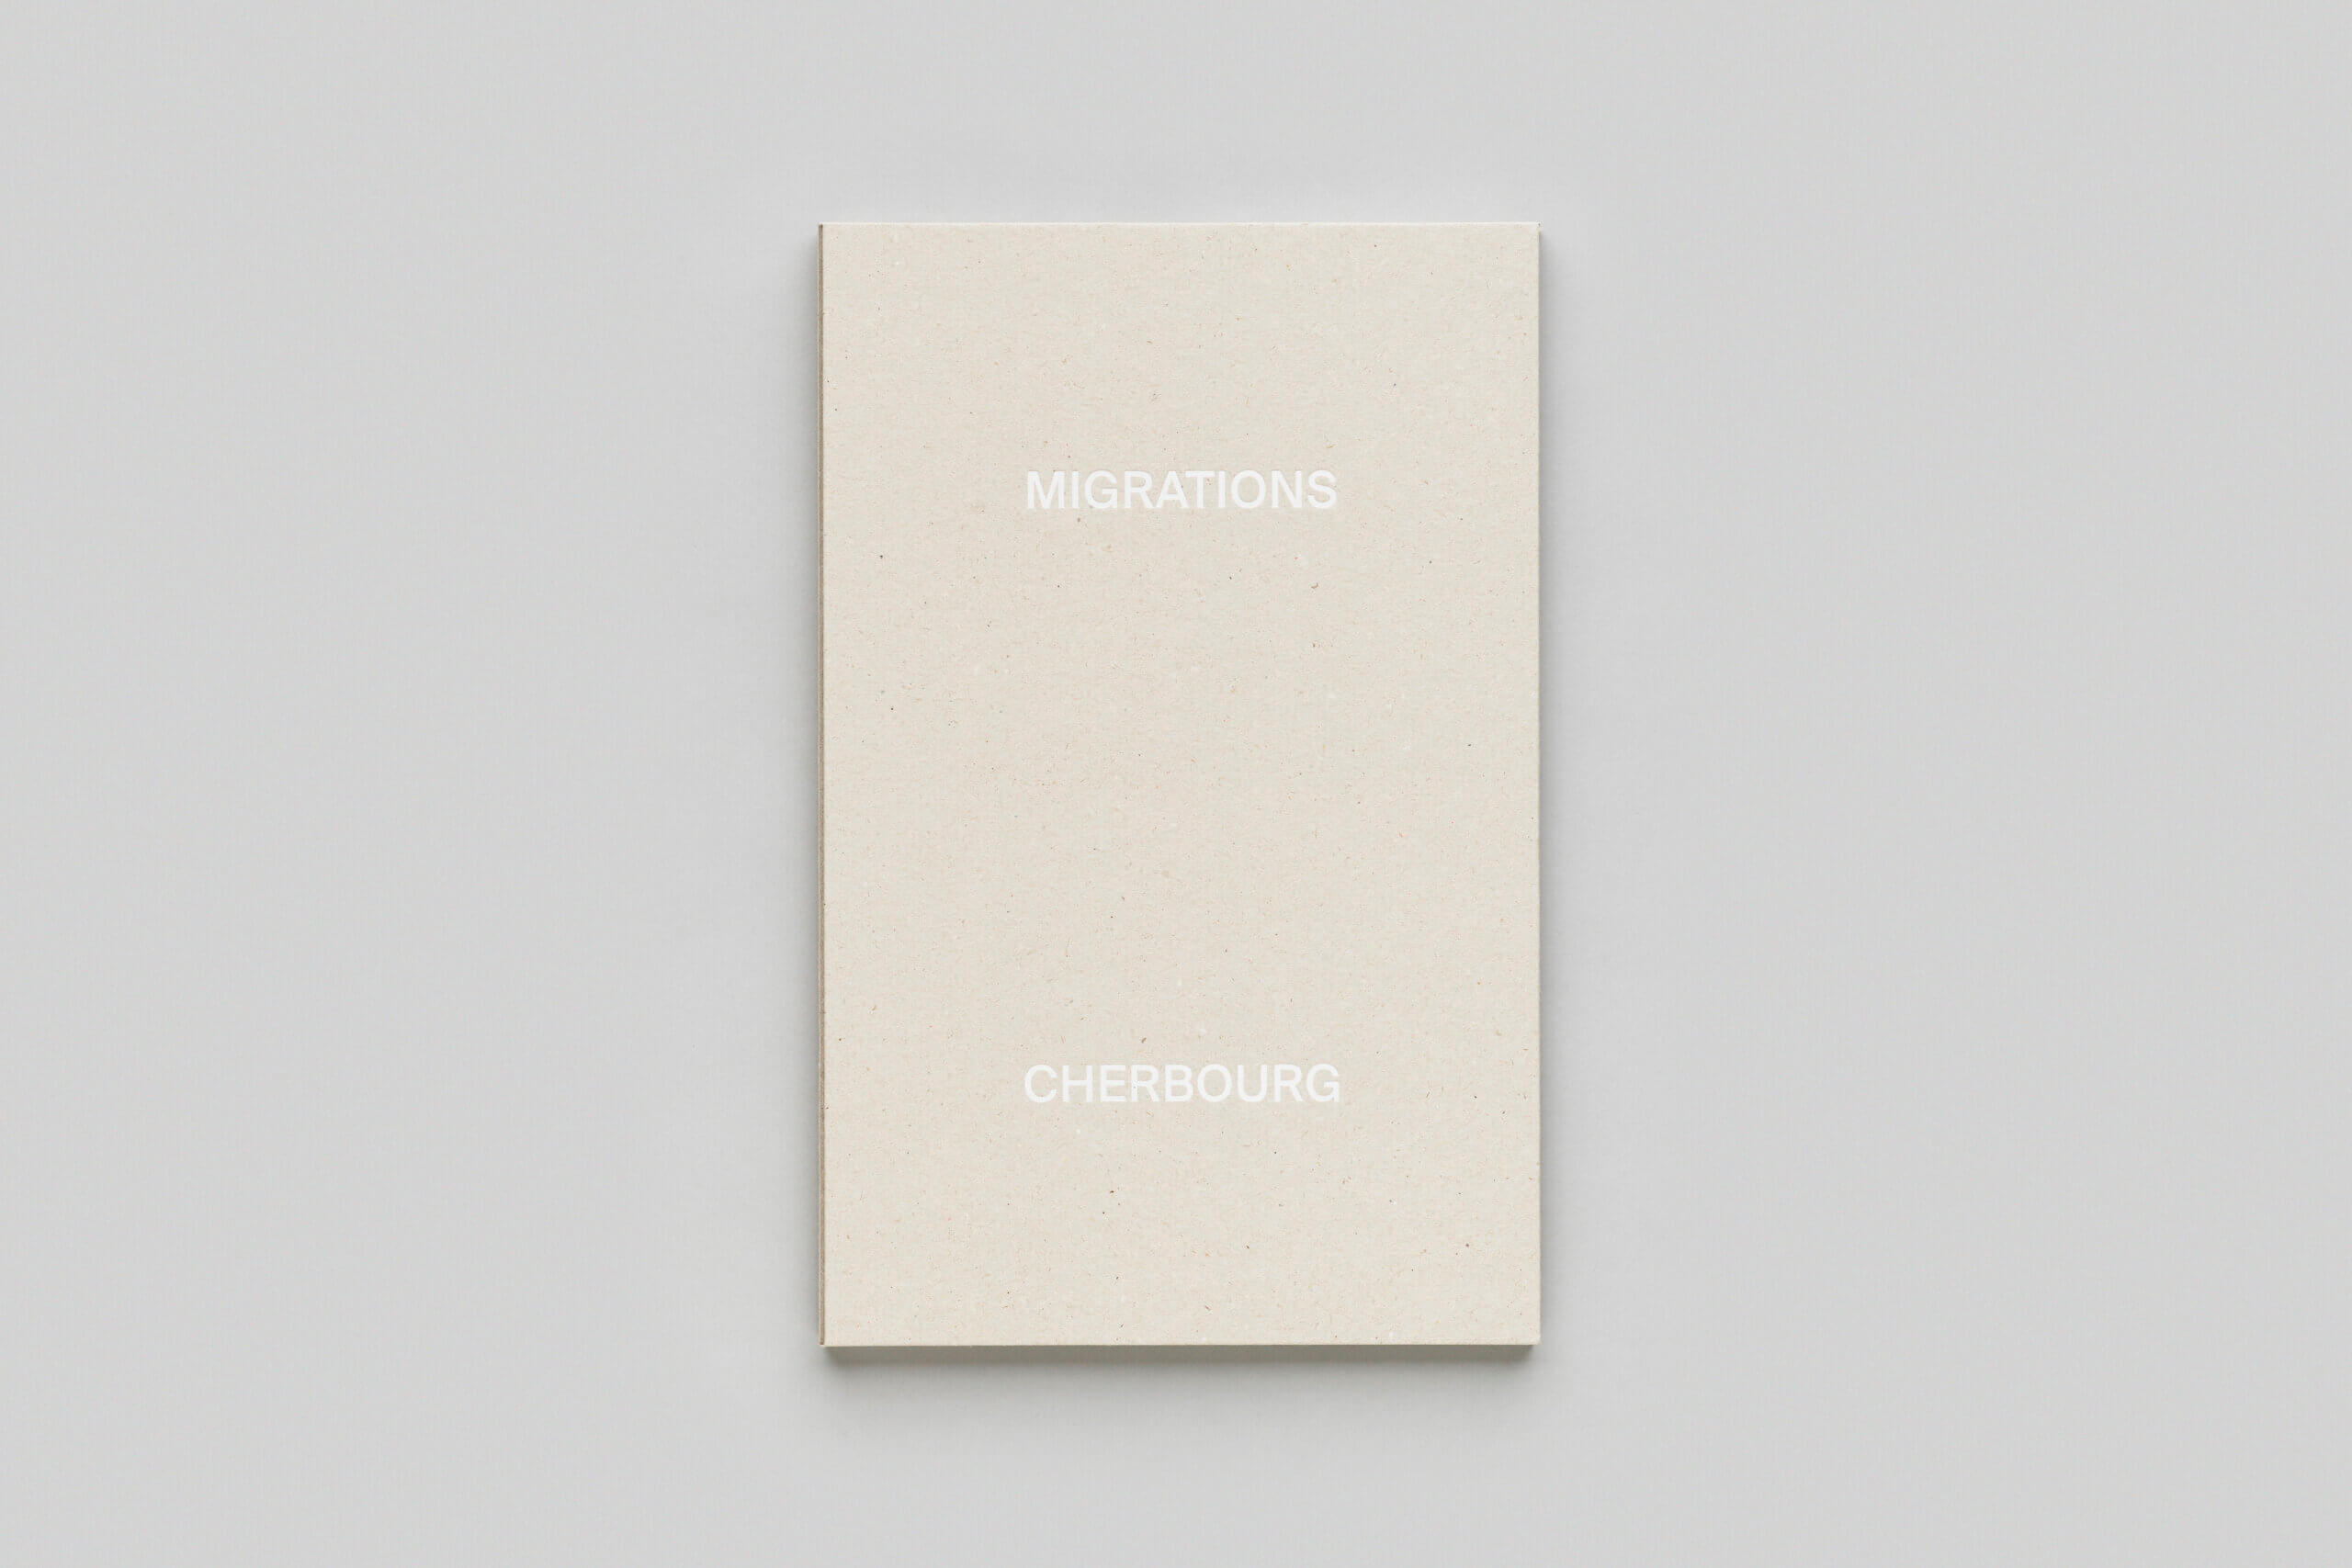 RVB_MIGRATIONS_cherbourg-guirkinger-cover-